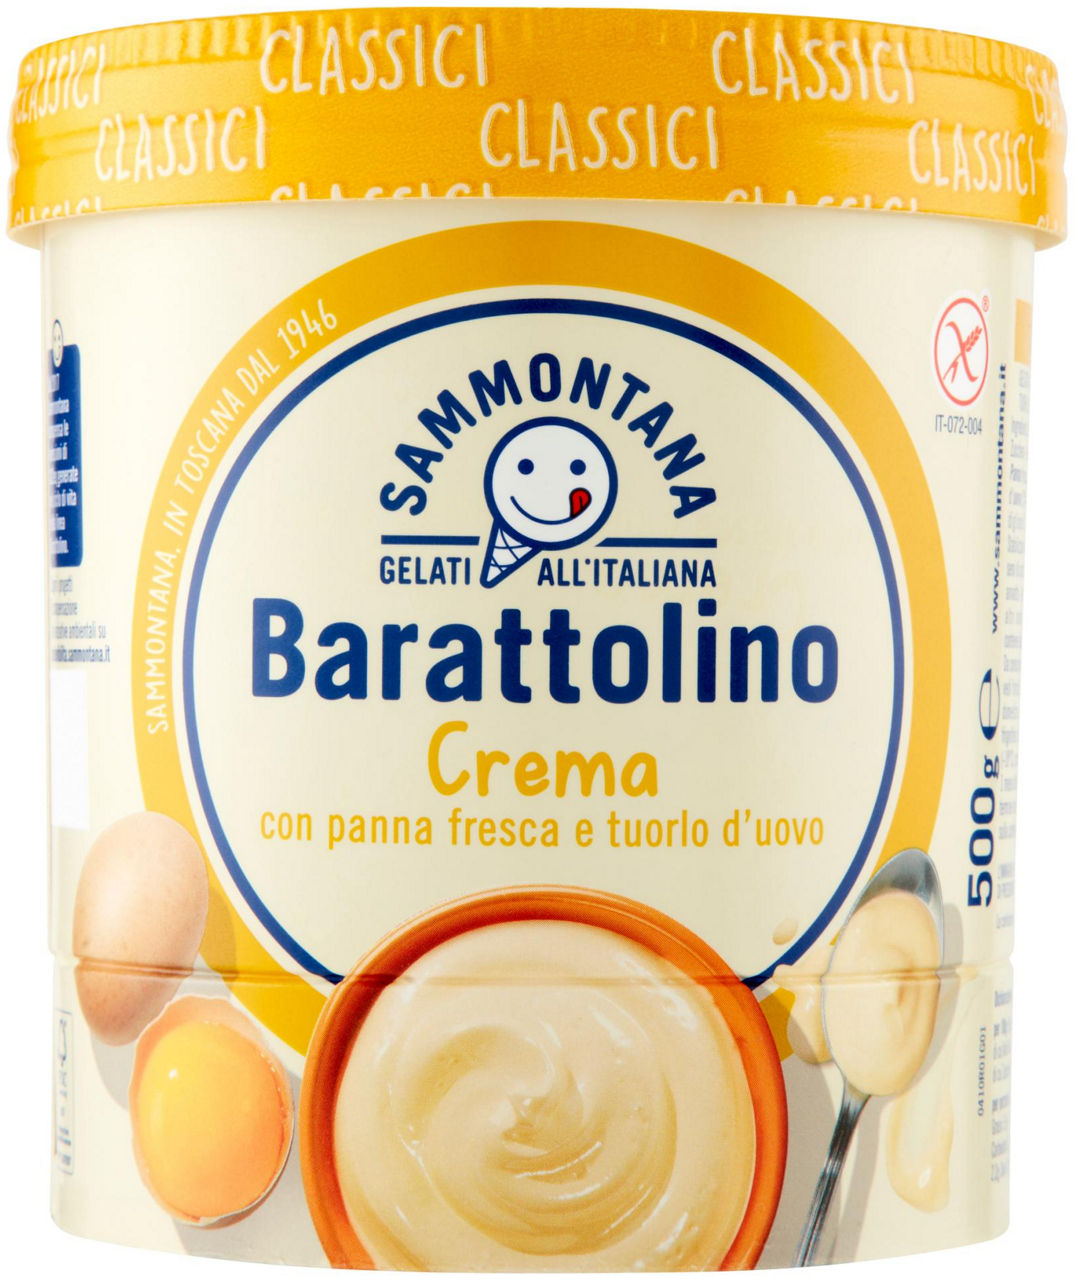 BARATTOLINO CLASSICO CREMA SAMMONTANA G 500 - 0